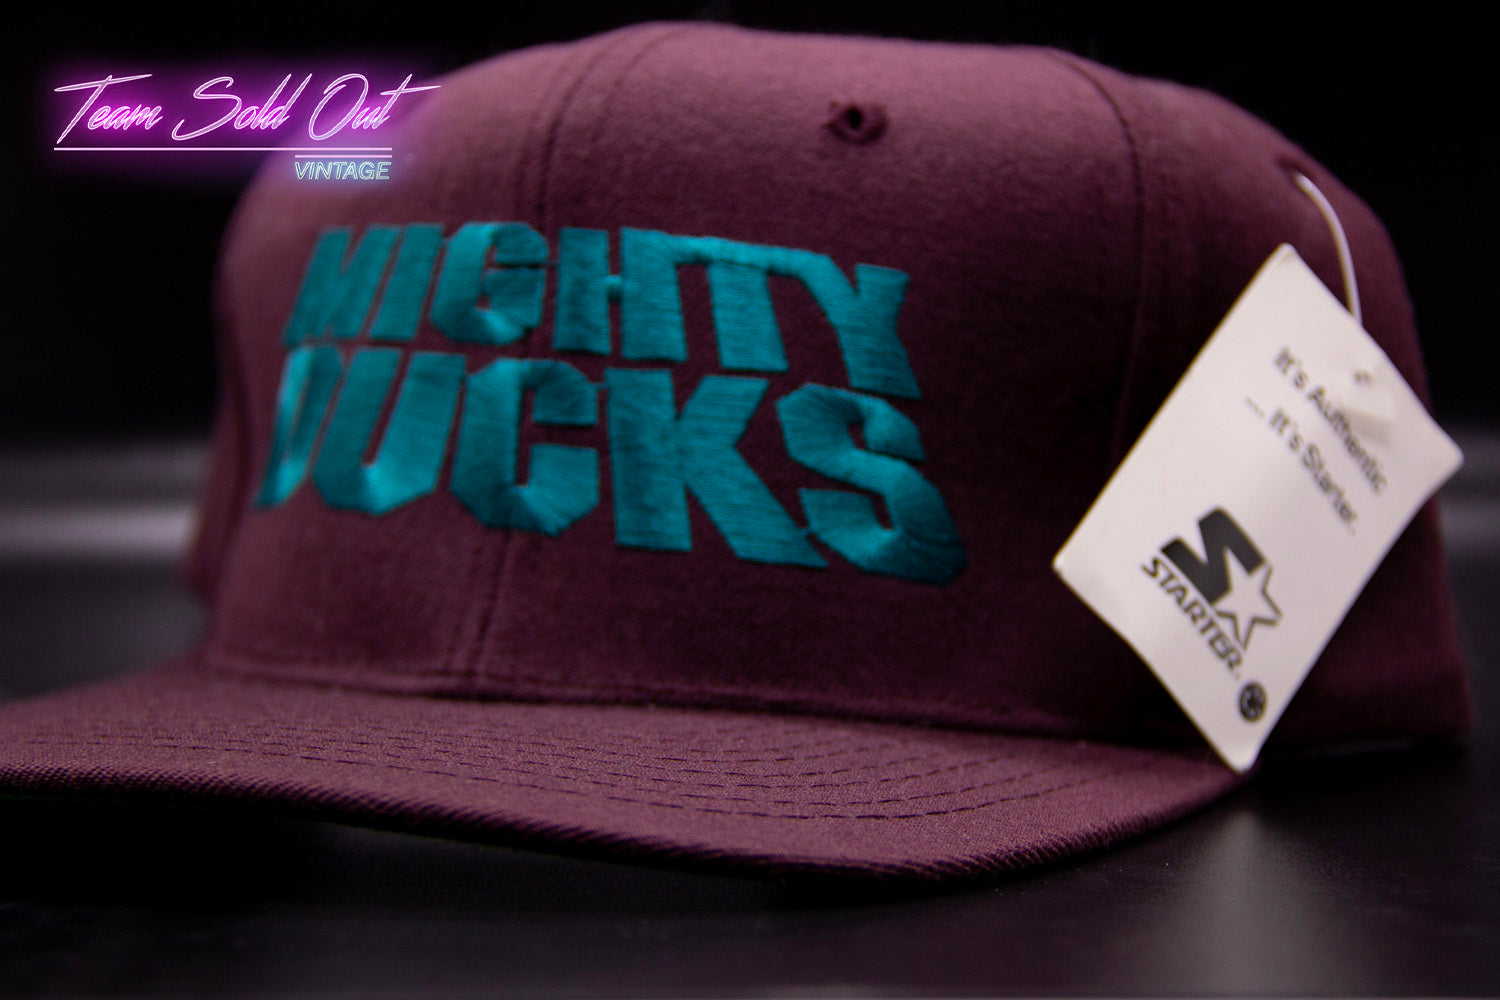 Vintage Anaheim Mighty Ducks NHL 90's Snapback Cap